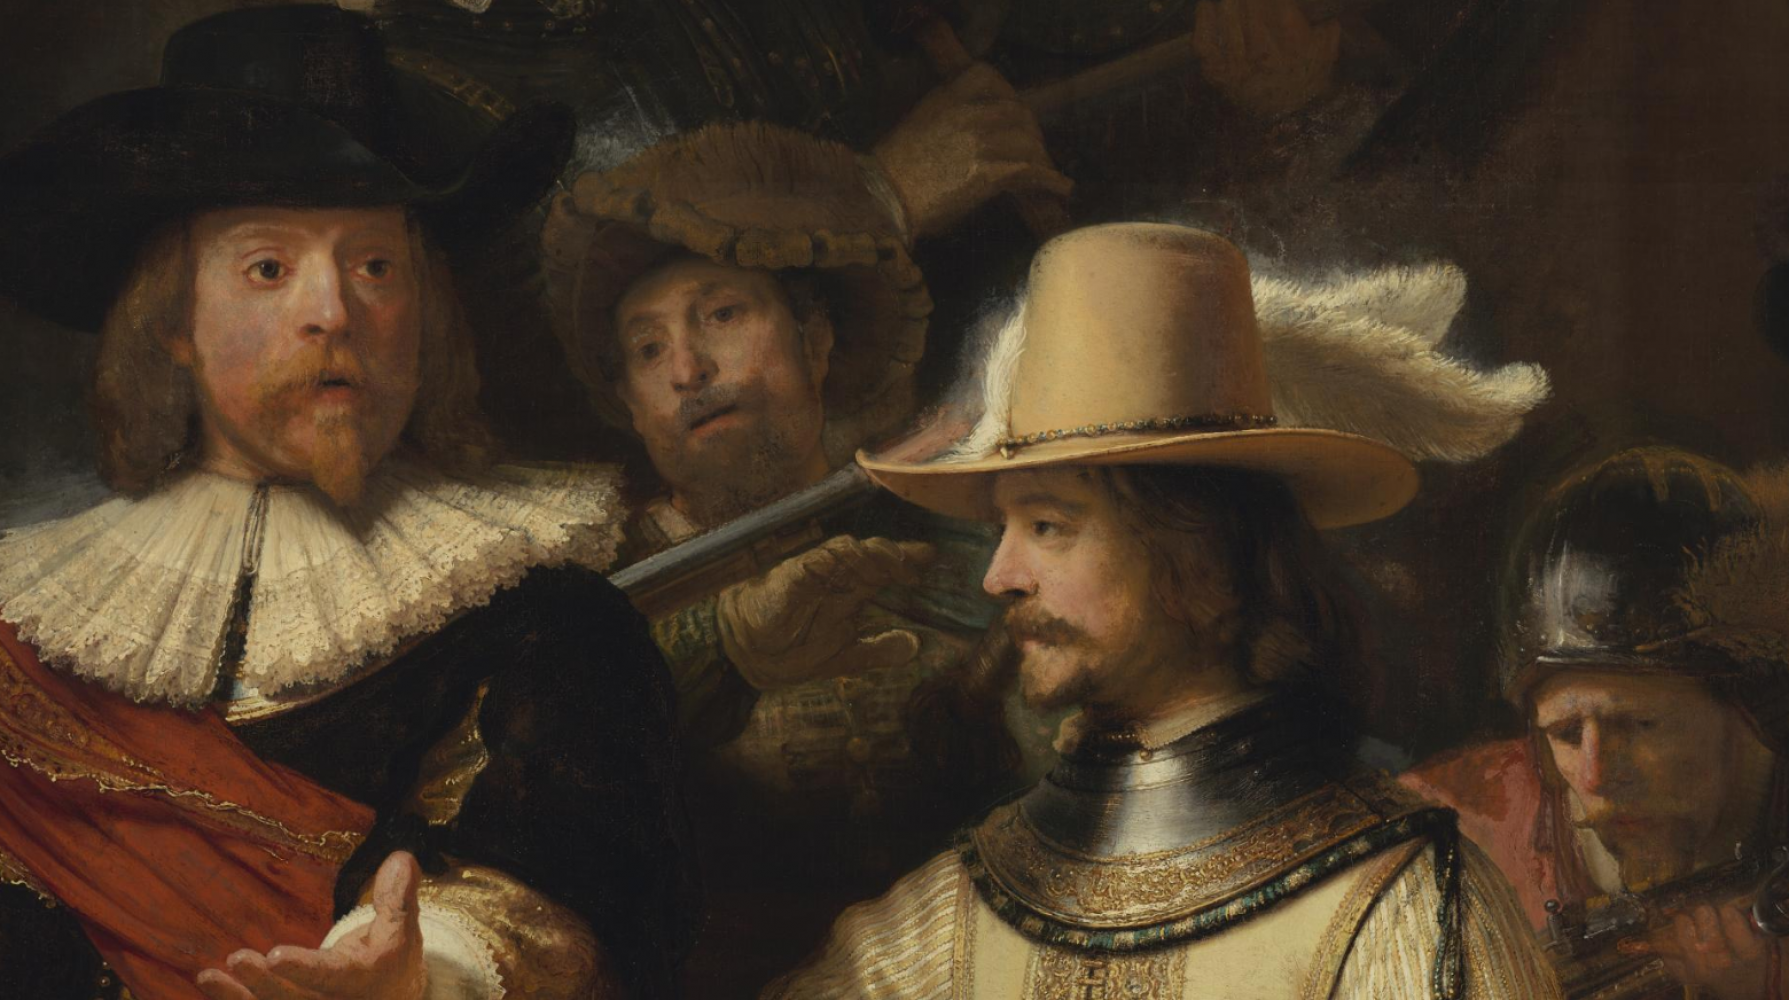 Rembrandt van Rijn "Die Nachtwache", Detail, 1642